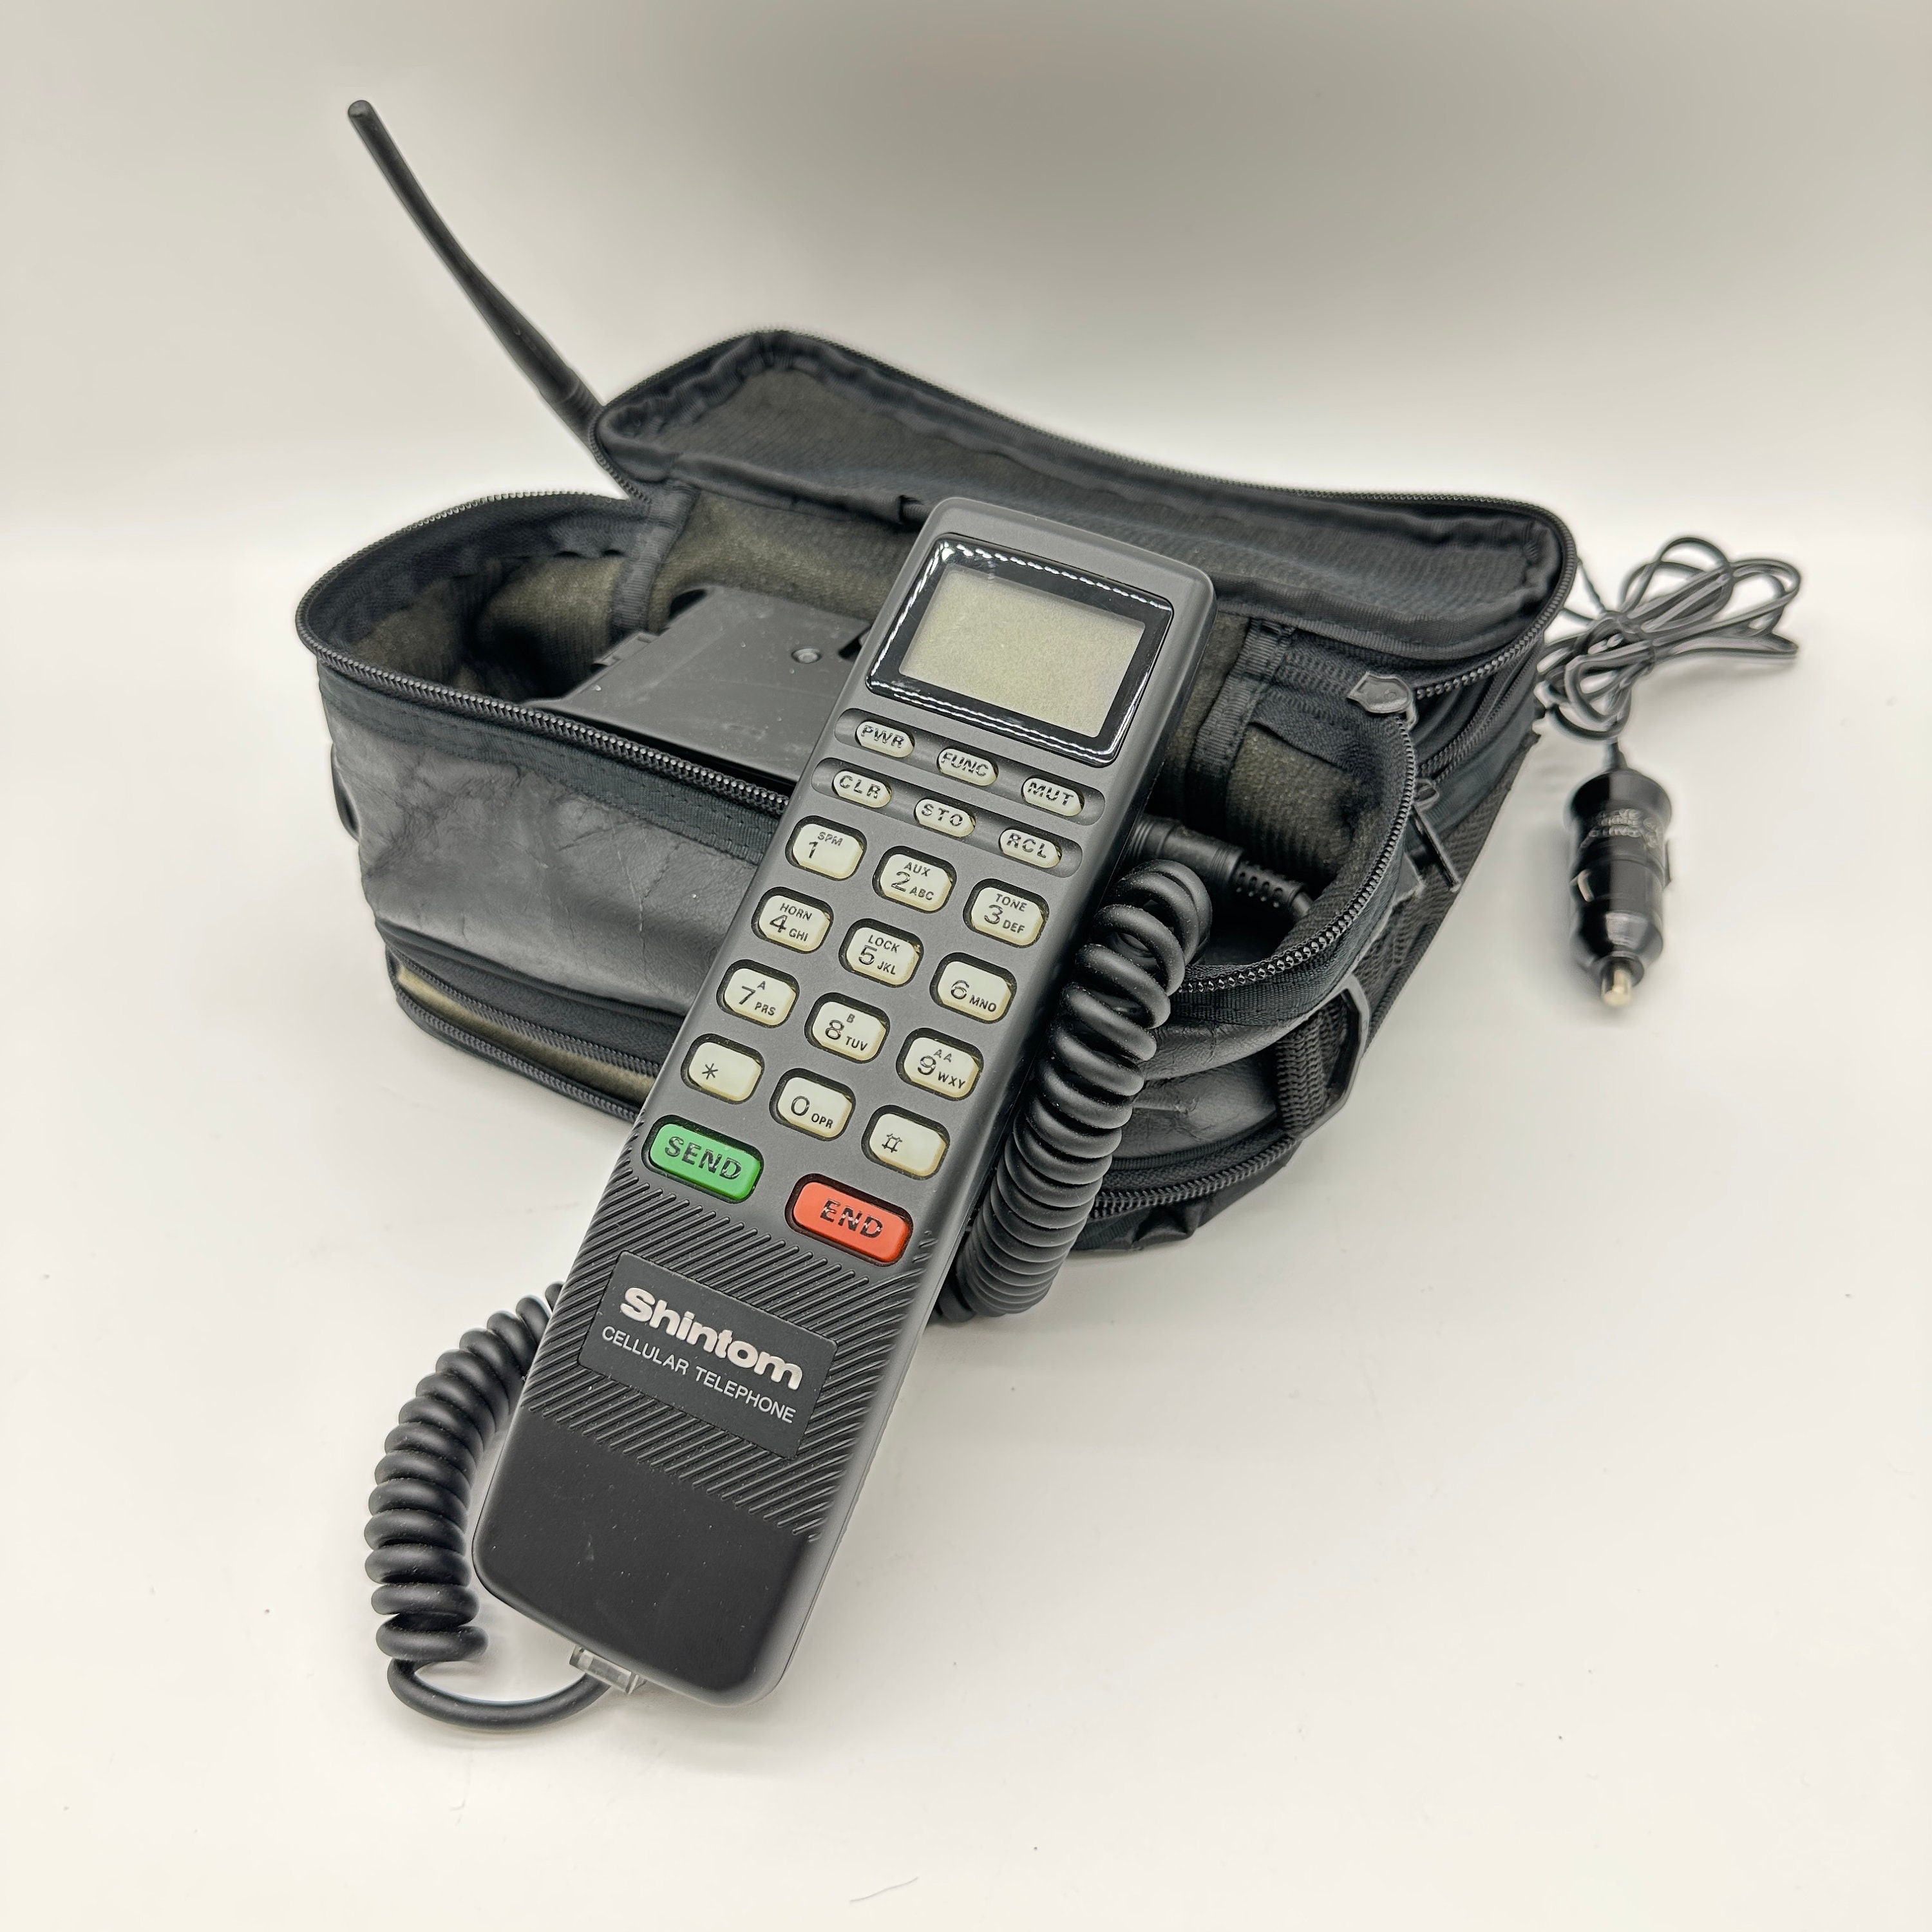 Radio Shack CT-1055 Bag Phone Car Cell Phone Powers Up